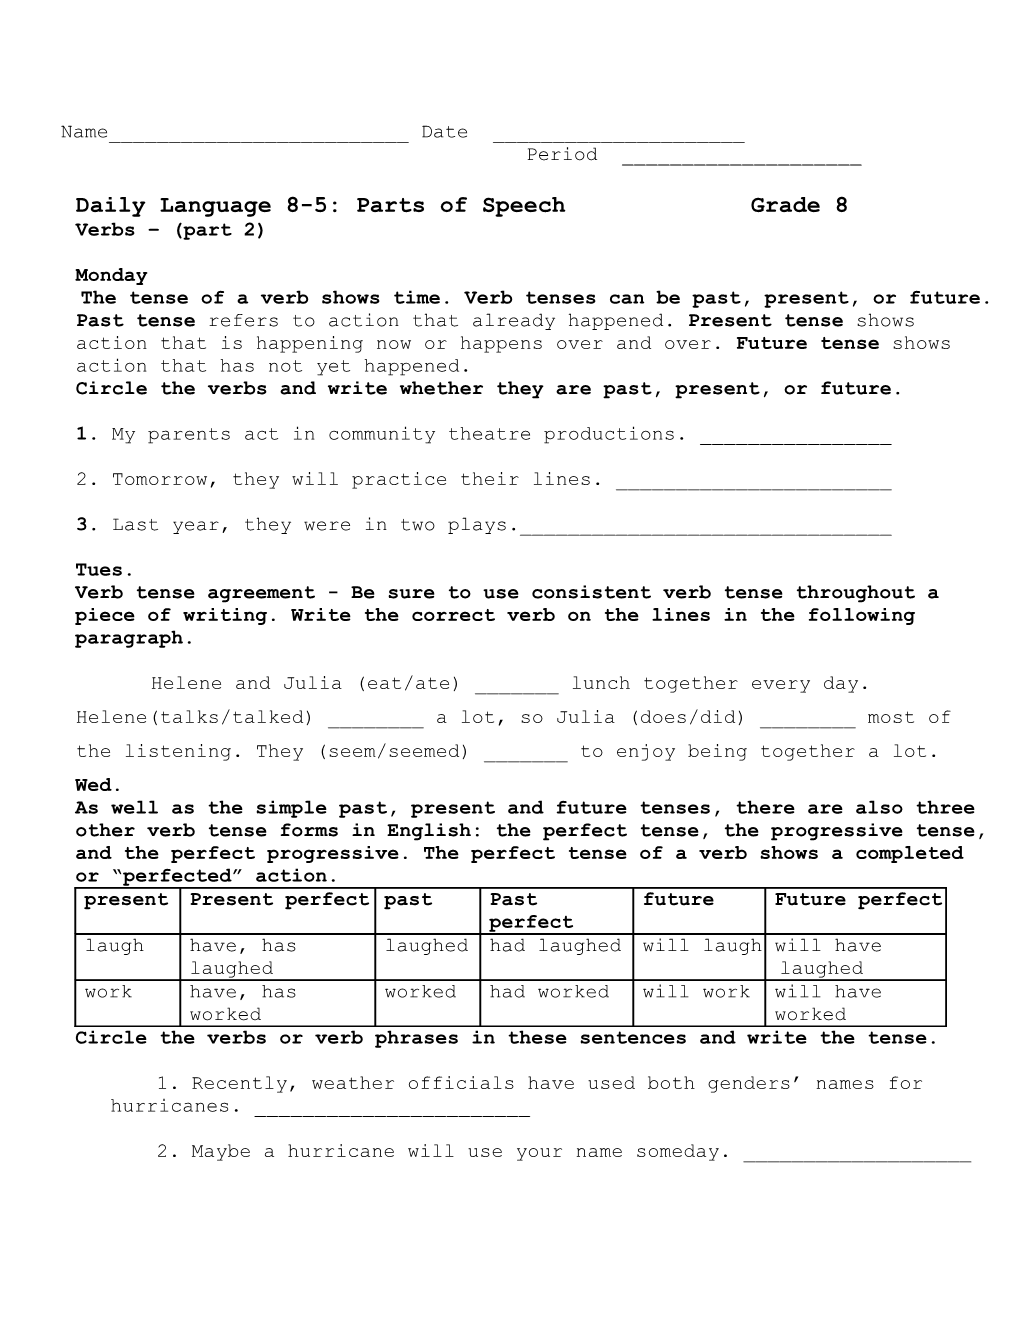 Daily Language 8-5: Parts of Speech Grade 8